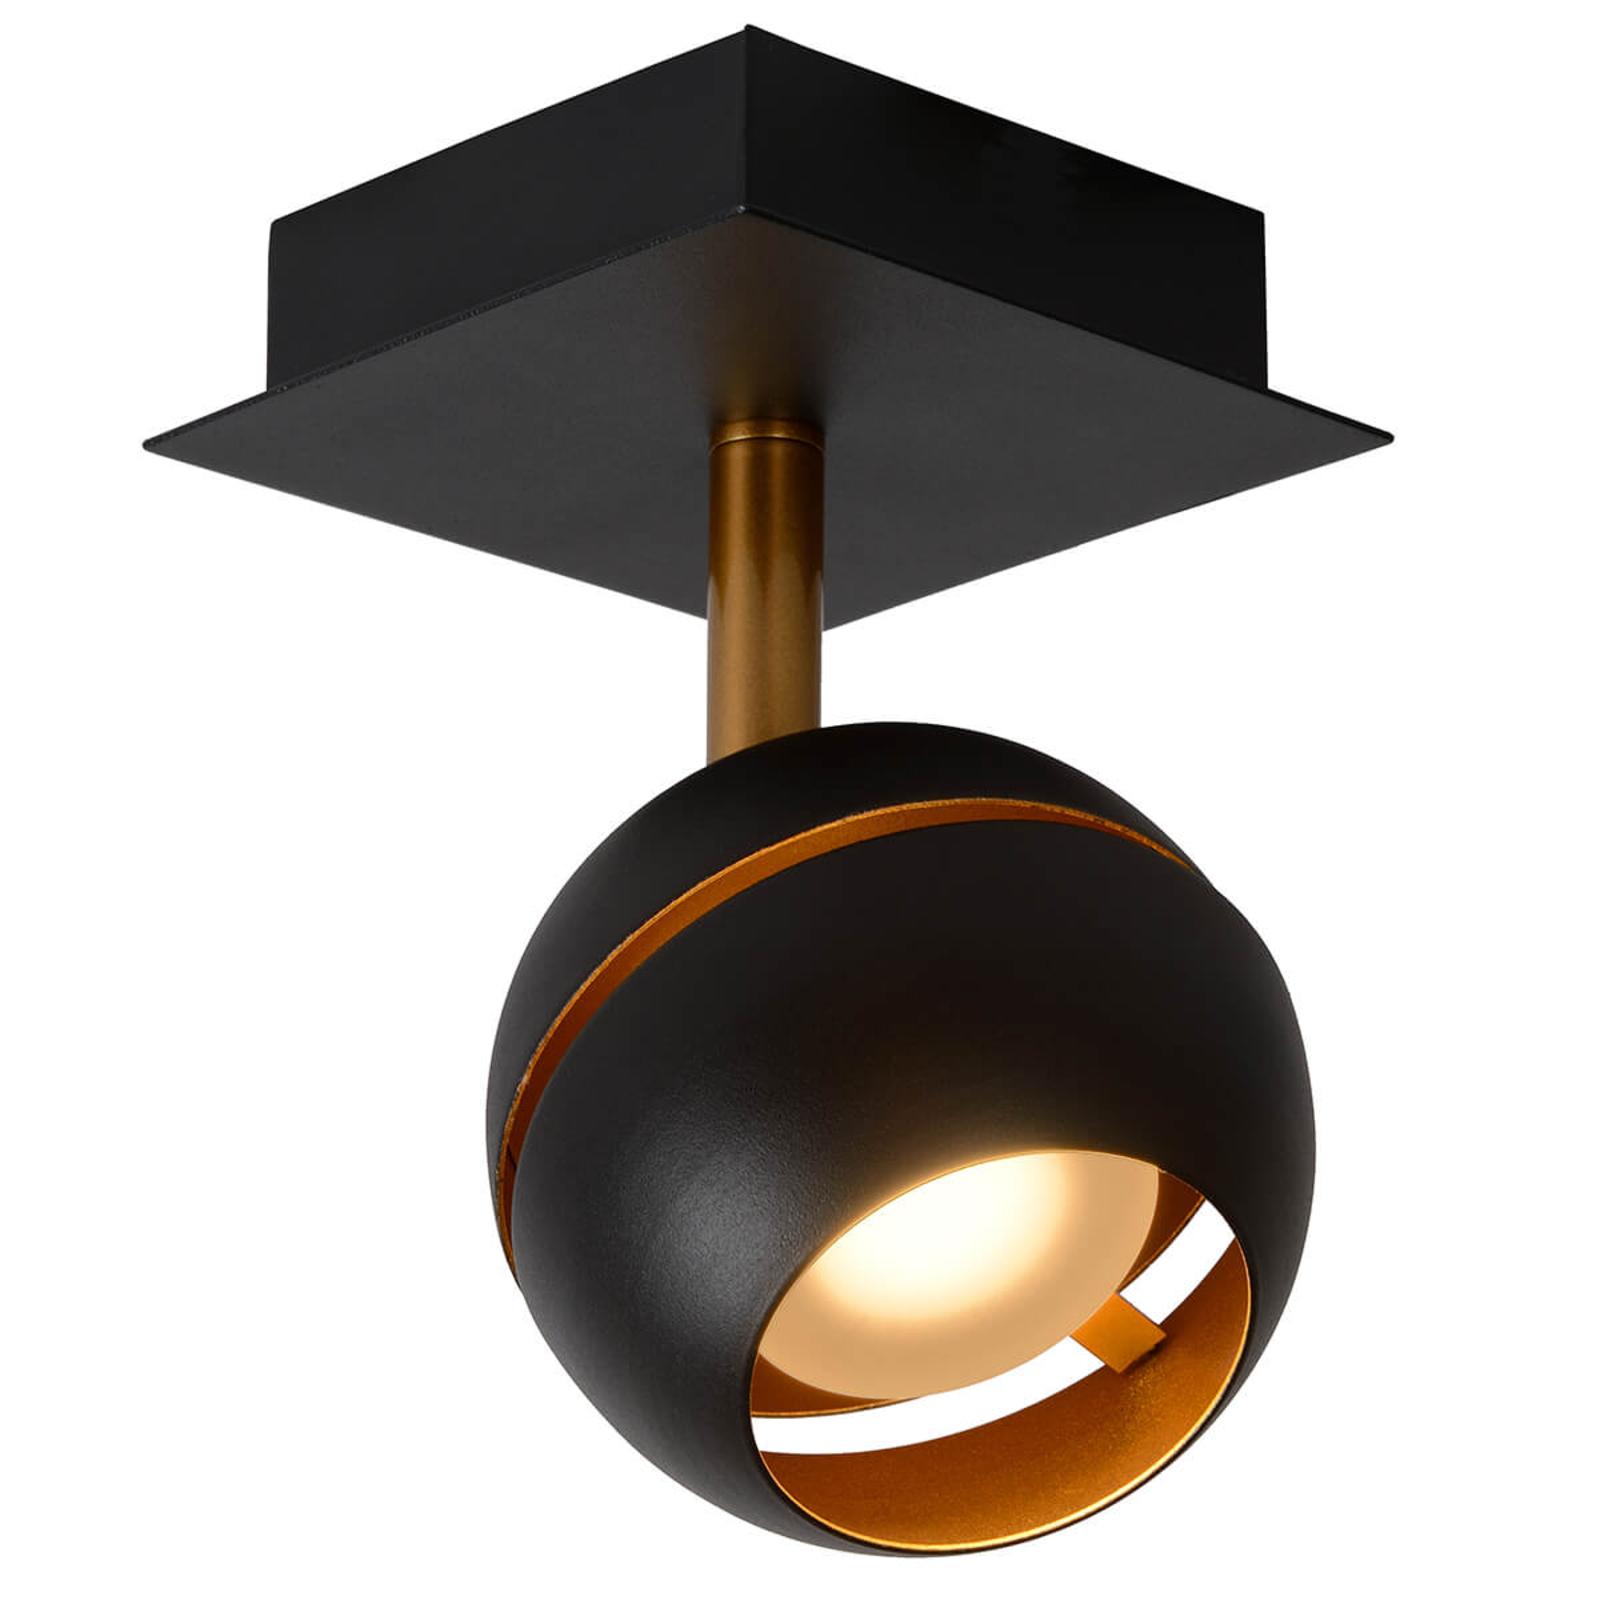 LED plafondspot Binari in bolvorm, zwart